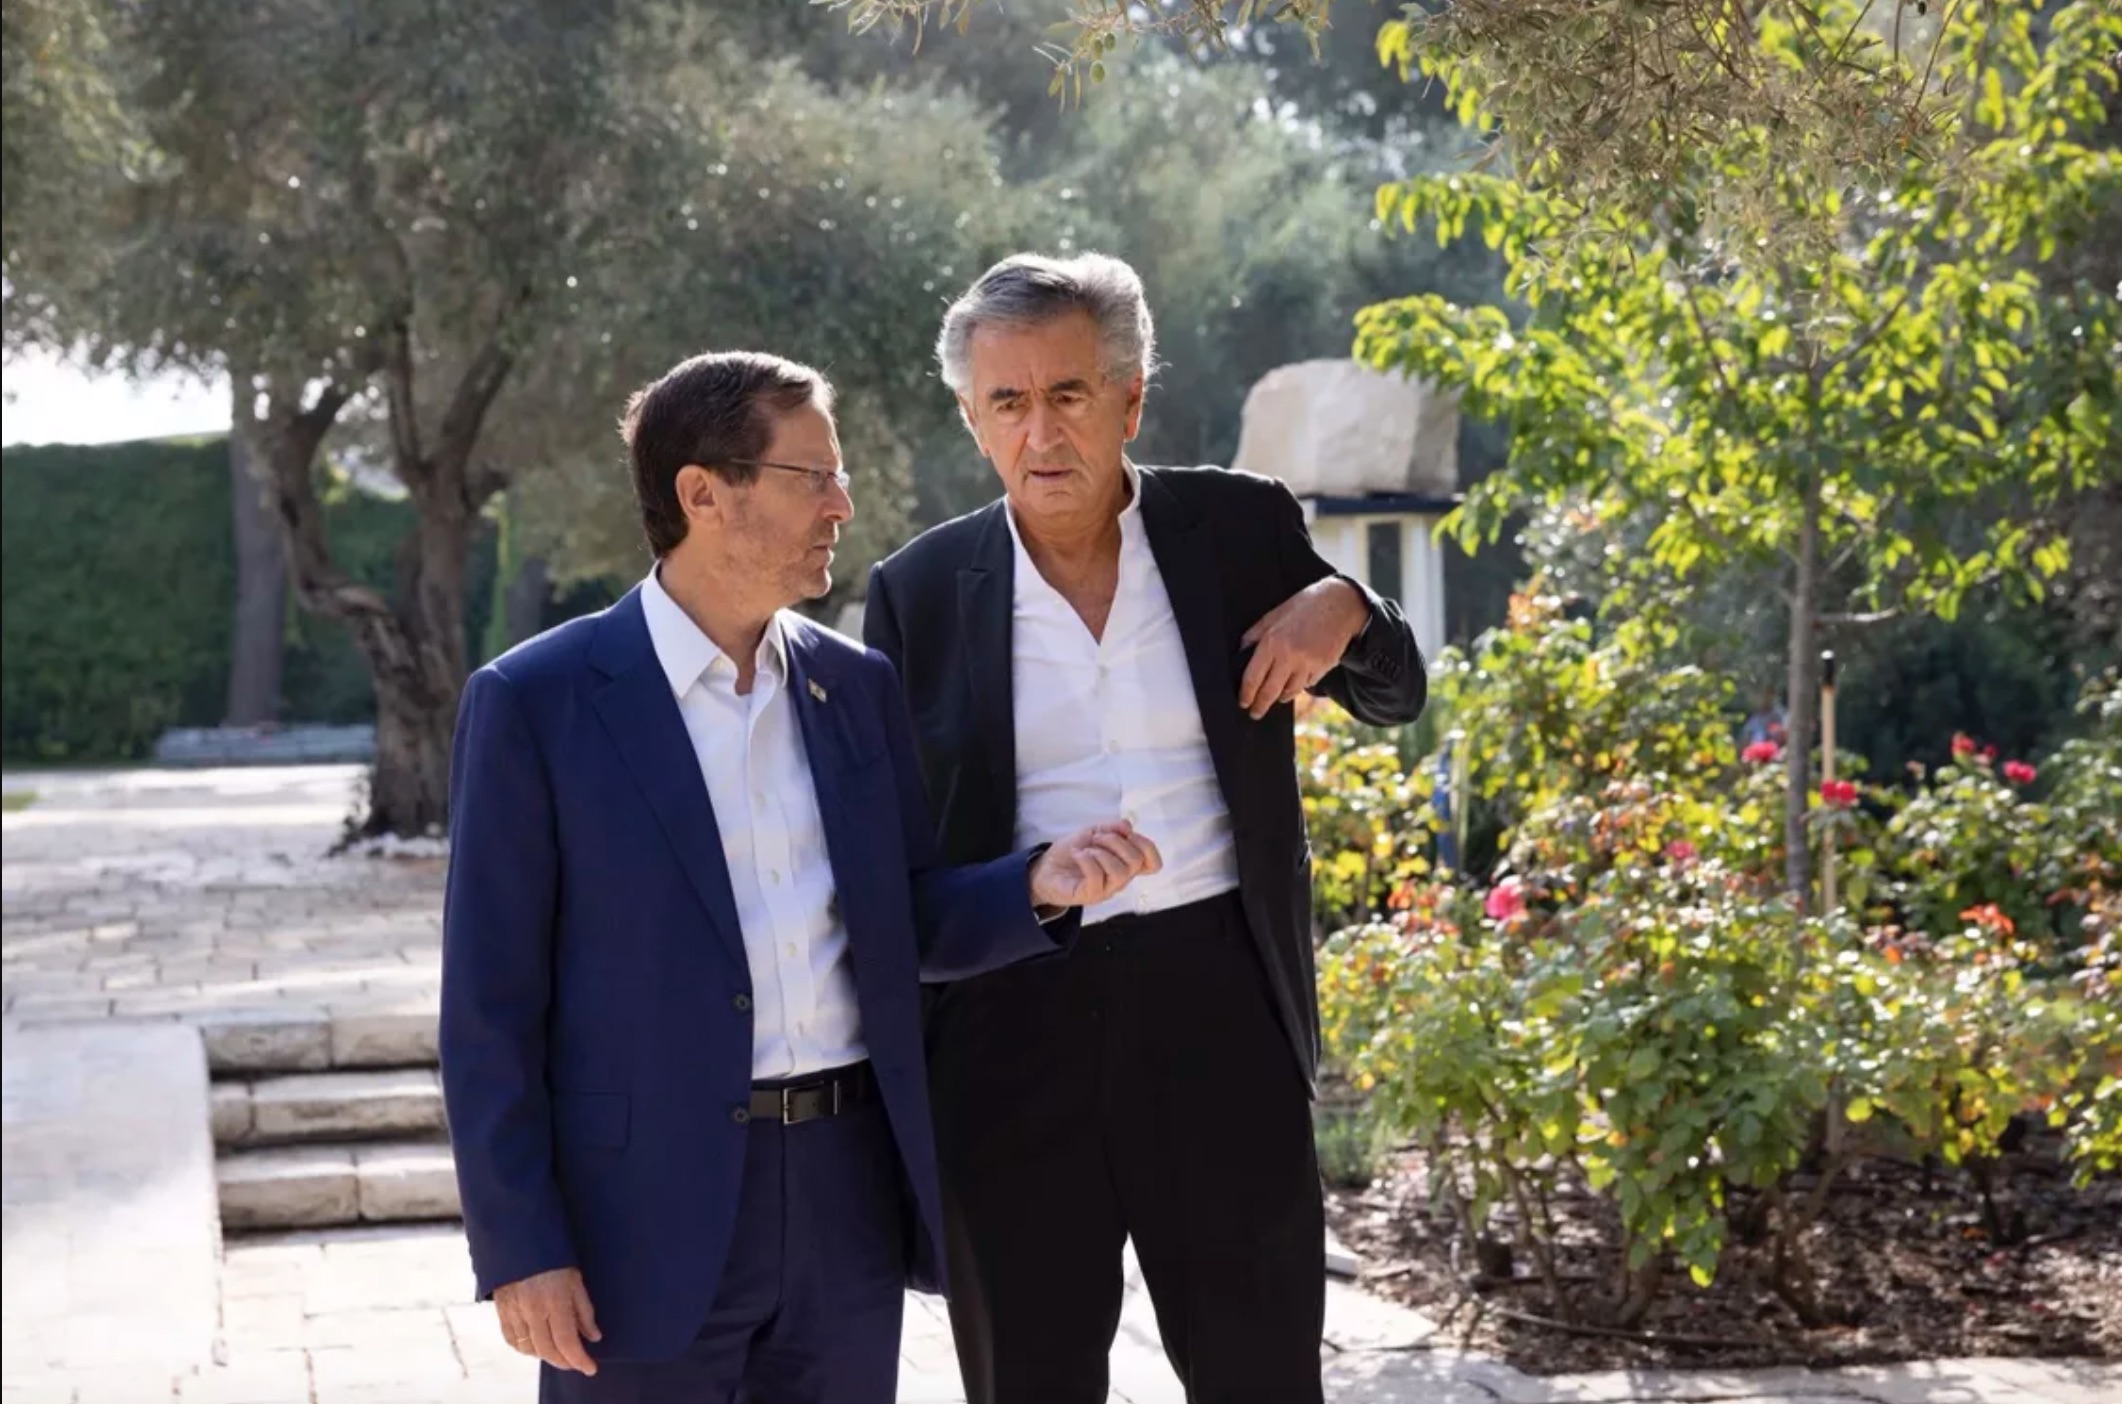 BHL avec le président de l’État d’Israël, Isaac Herzog, dans les jardins de sa résidence, Beit HaNassi, le 12 octobre